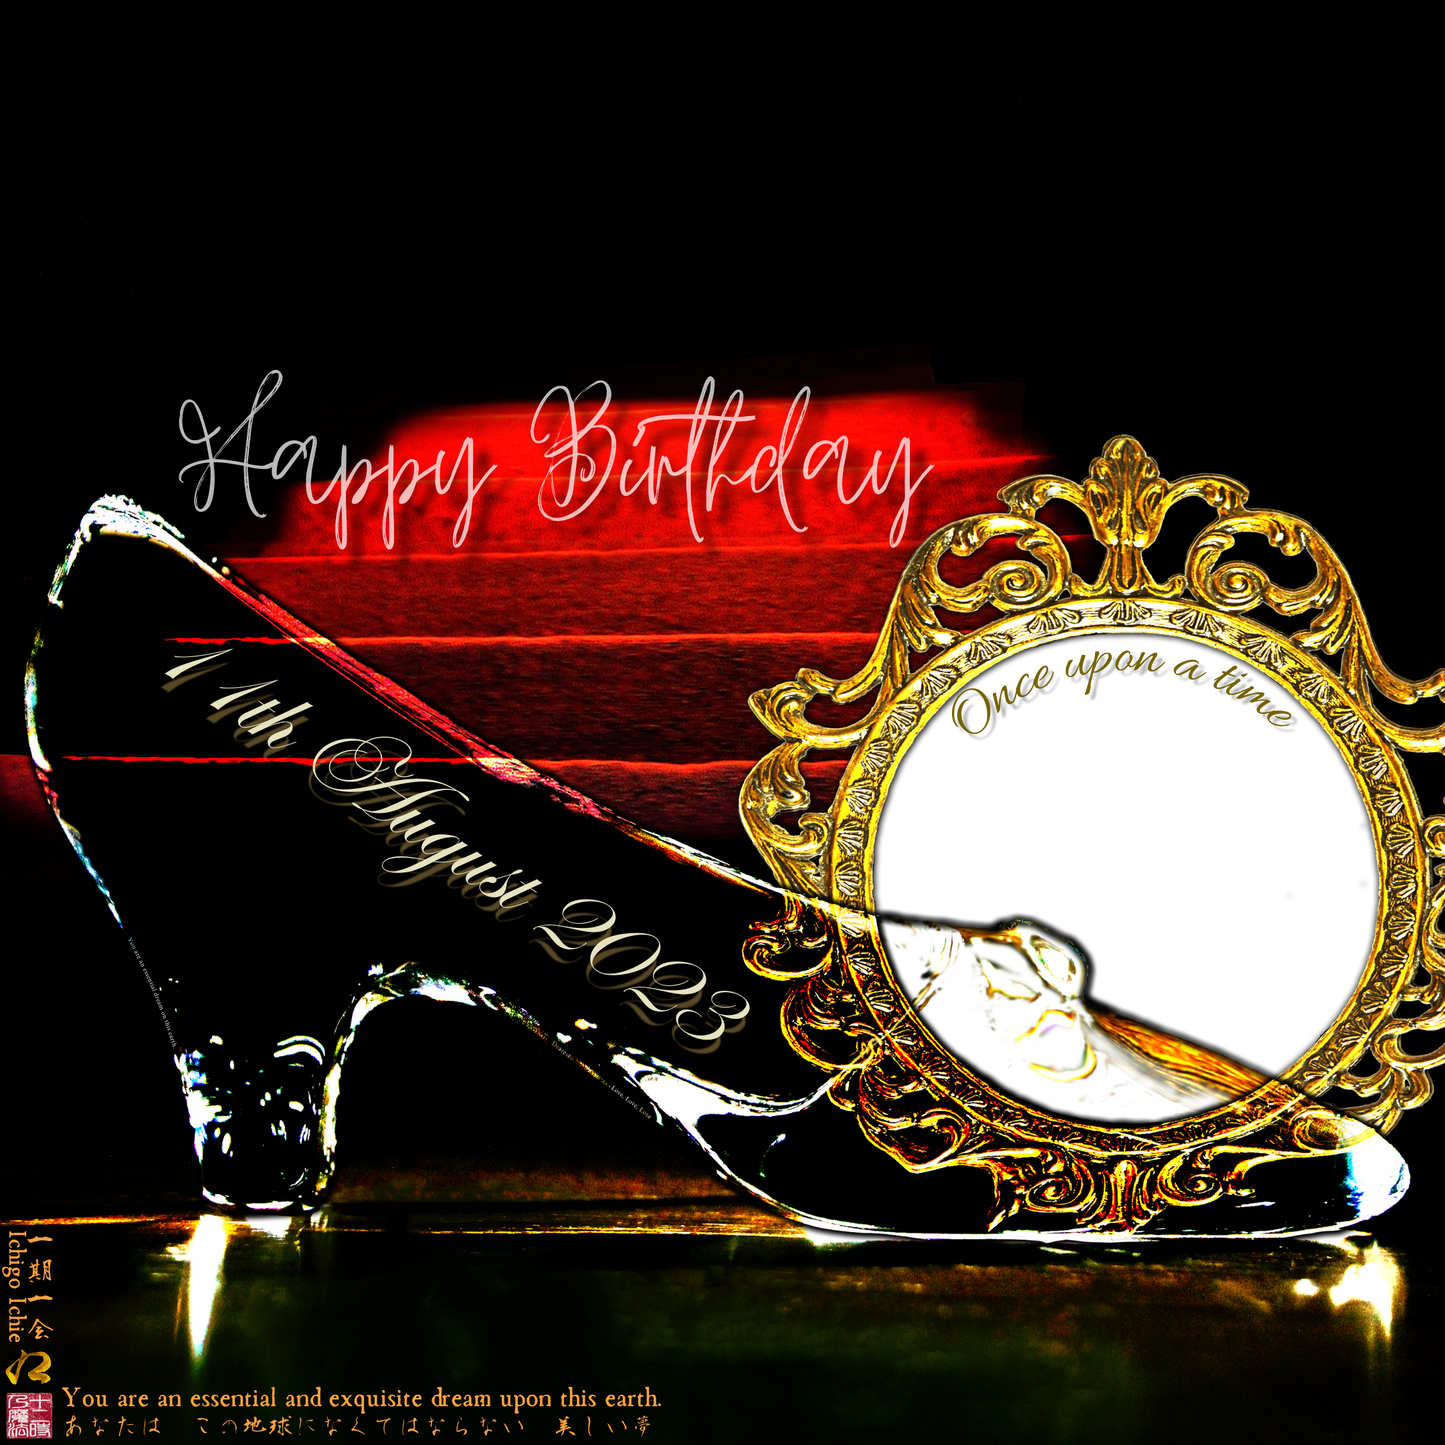 Happy Birthday Glass Slipper "Ichigo Ichie" 11th August 2023 the Right (1-of-1) NFT Art